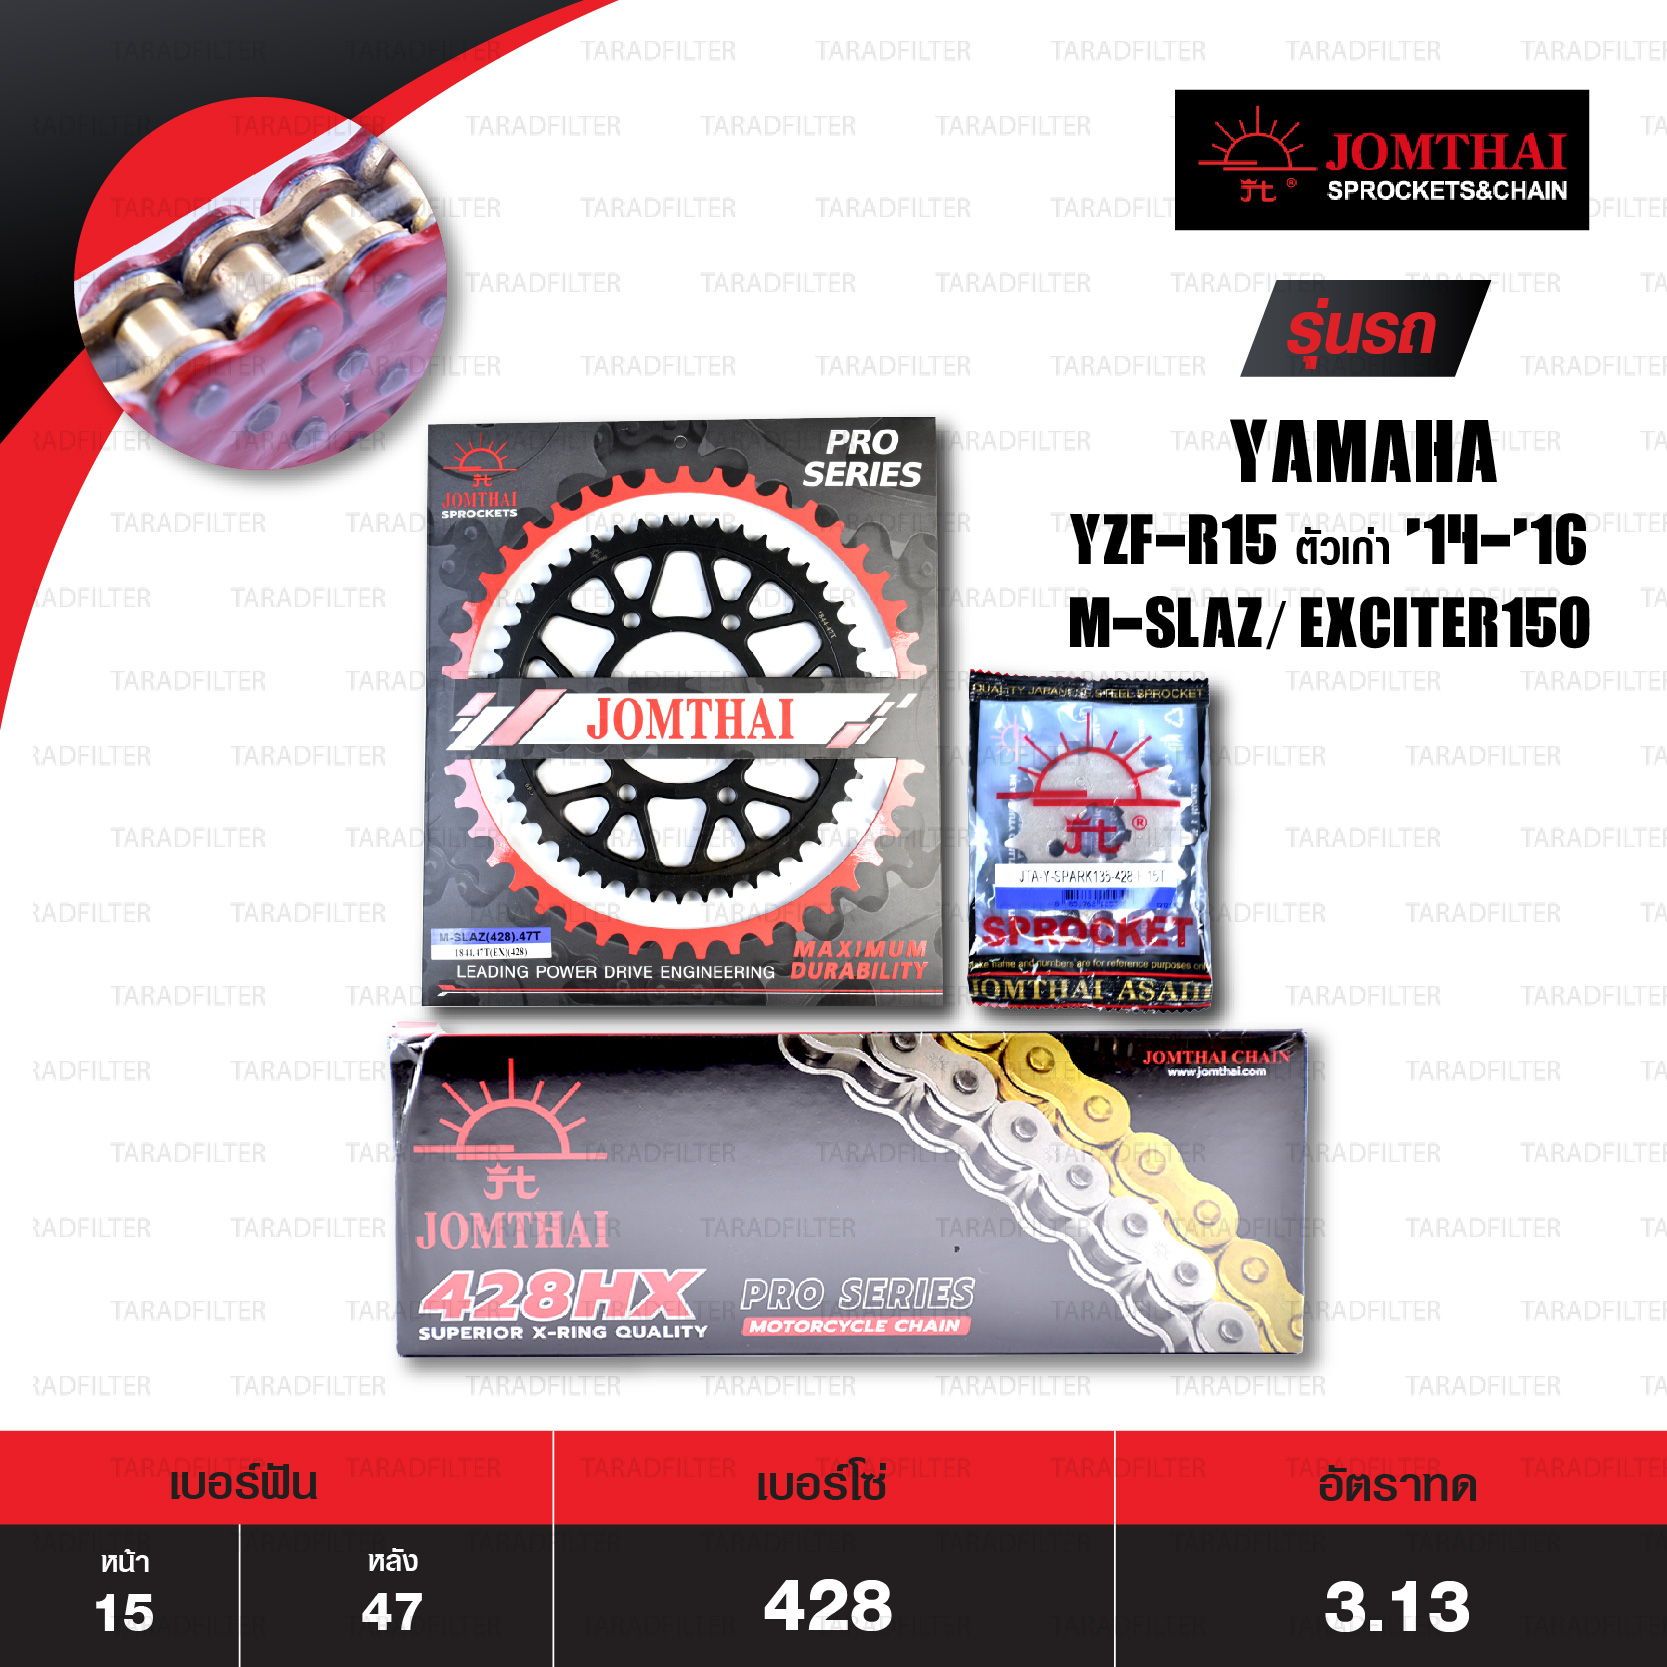 JOMTHAI ชุดเปลี่ยนโซ่-สเตอร์ Pro Series โซ่ X-ring (ASMX) สีแดง และ สเตอร์หลังสีดำ ใช้สำหรับ Yamaha รุ่น YZF-R15 ตัวเก่า, M-Slaz และ Exciter150 [15/47]